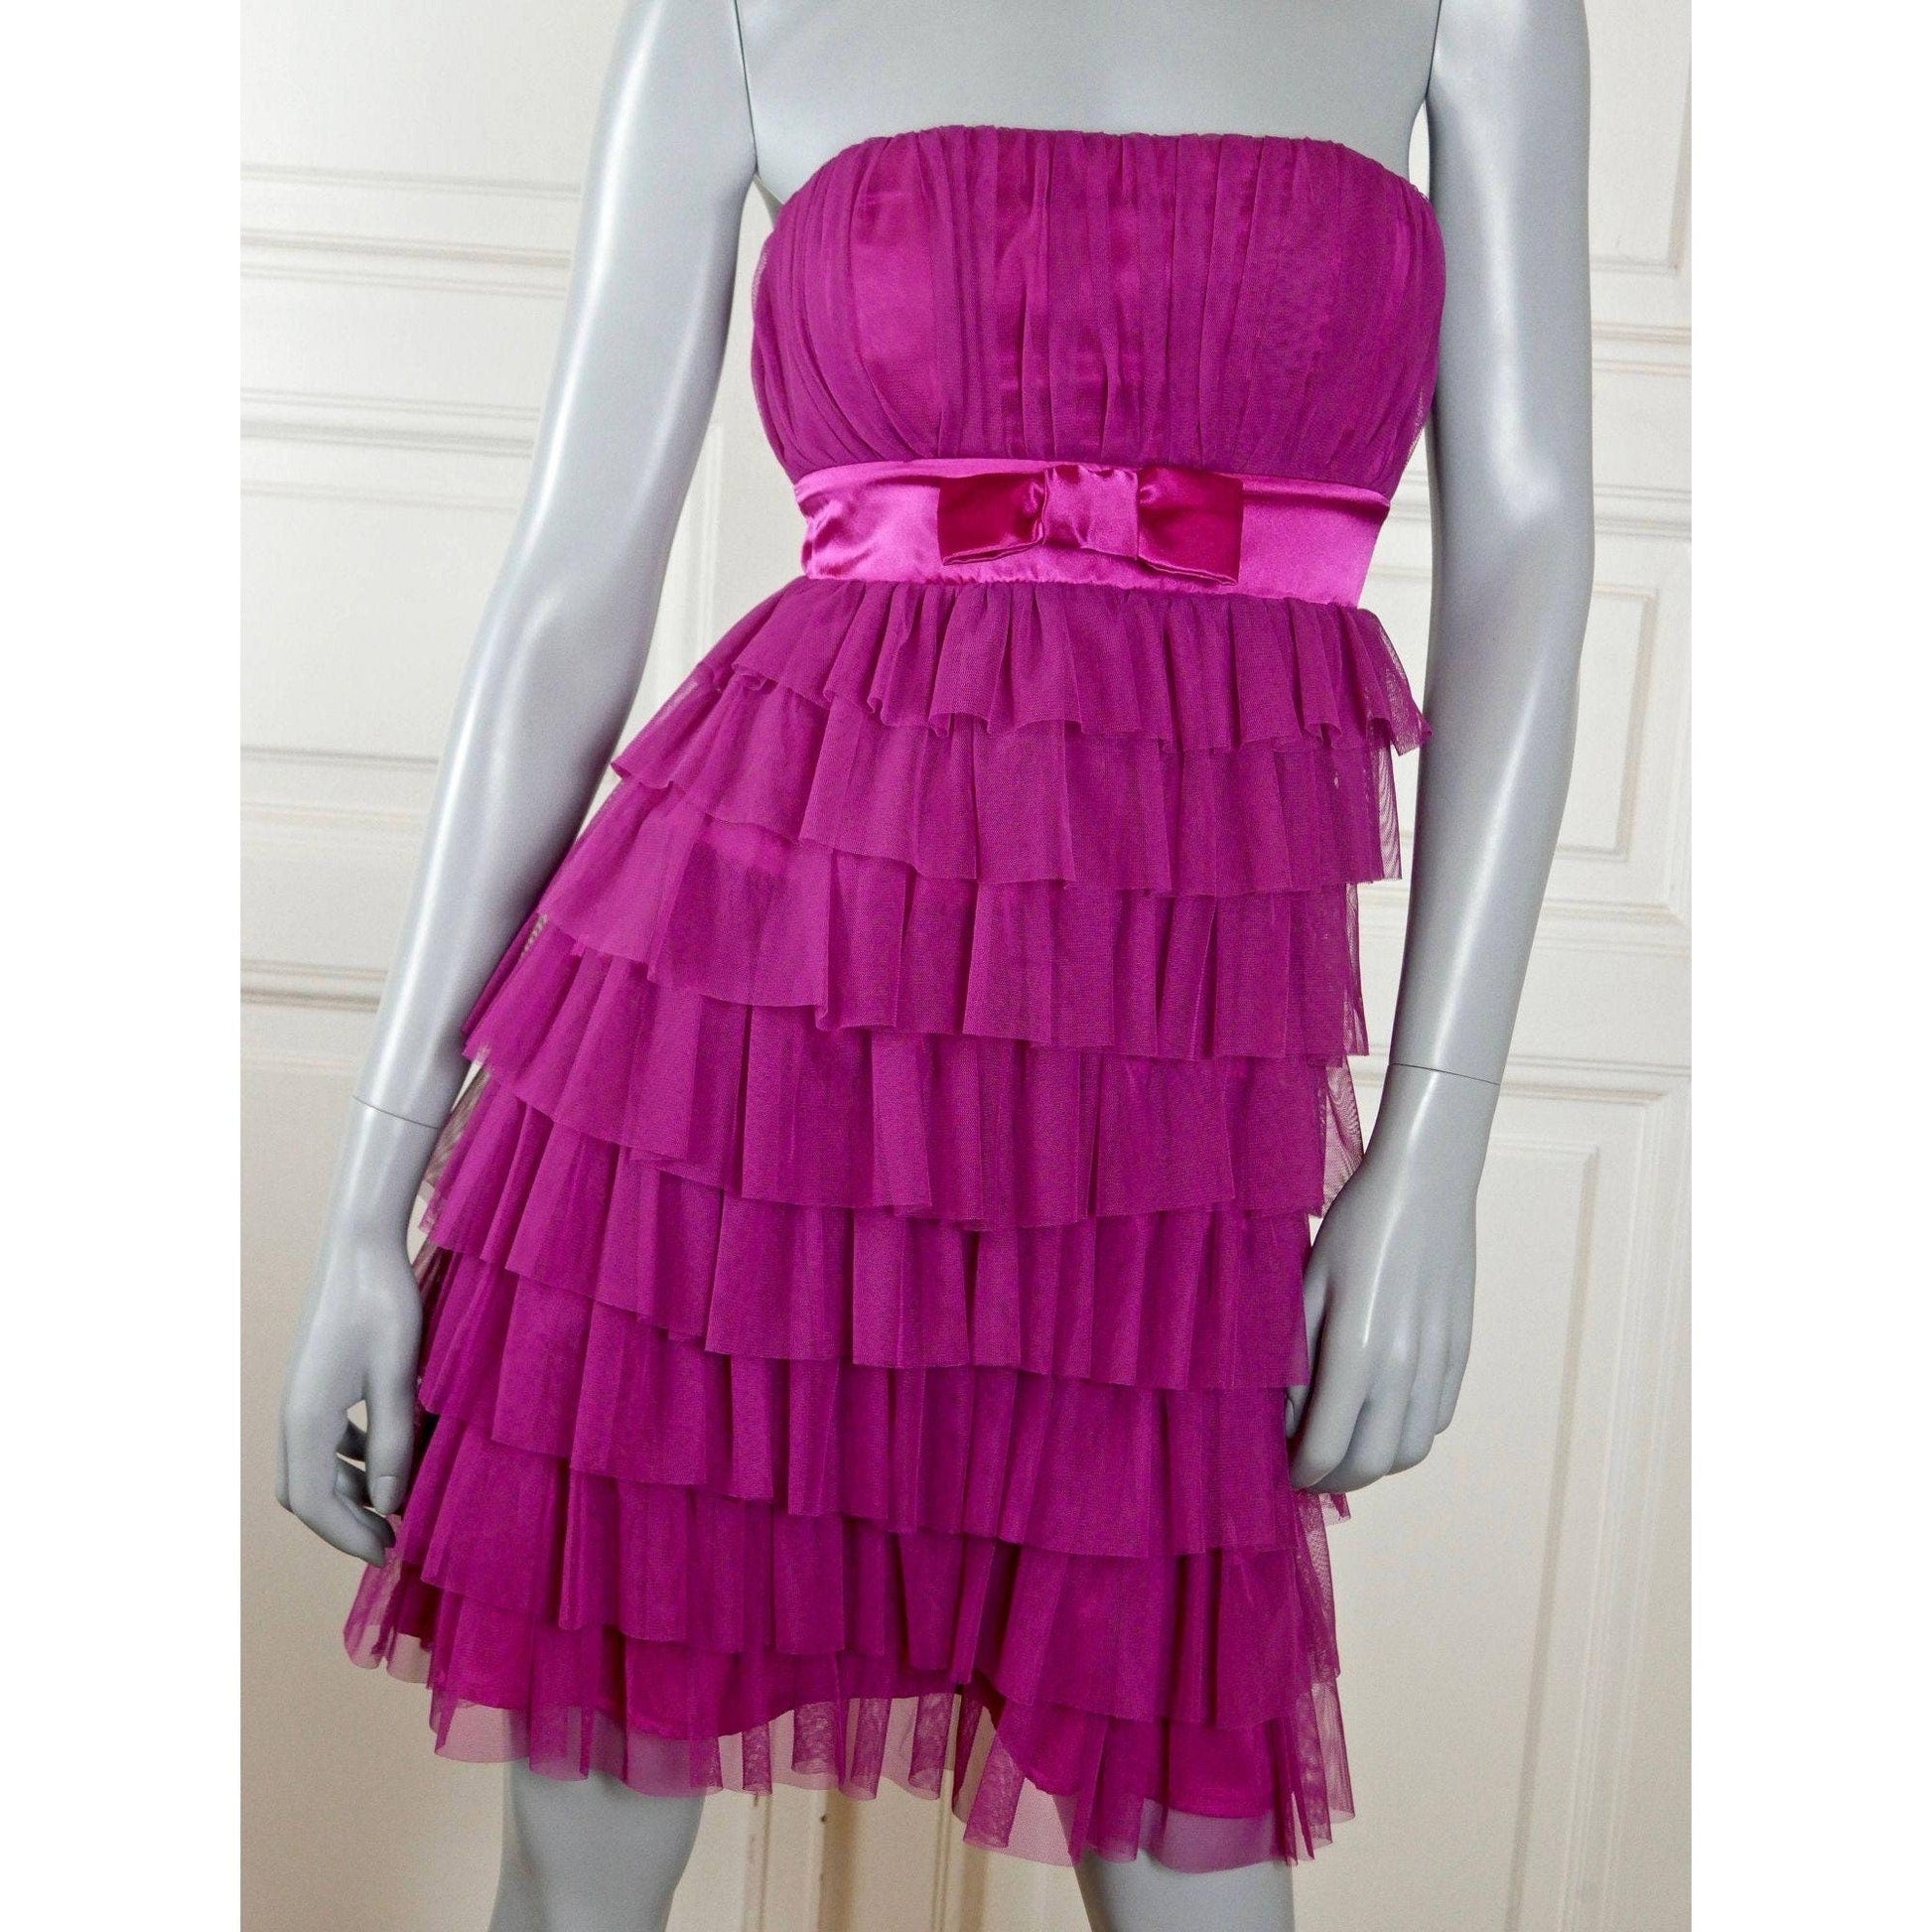 1980s Vintage Prom Dress: Dark Cerise Pink | Strapless with Ruffled Layers, Empire Waist Leo Gabor Vintage